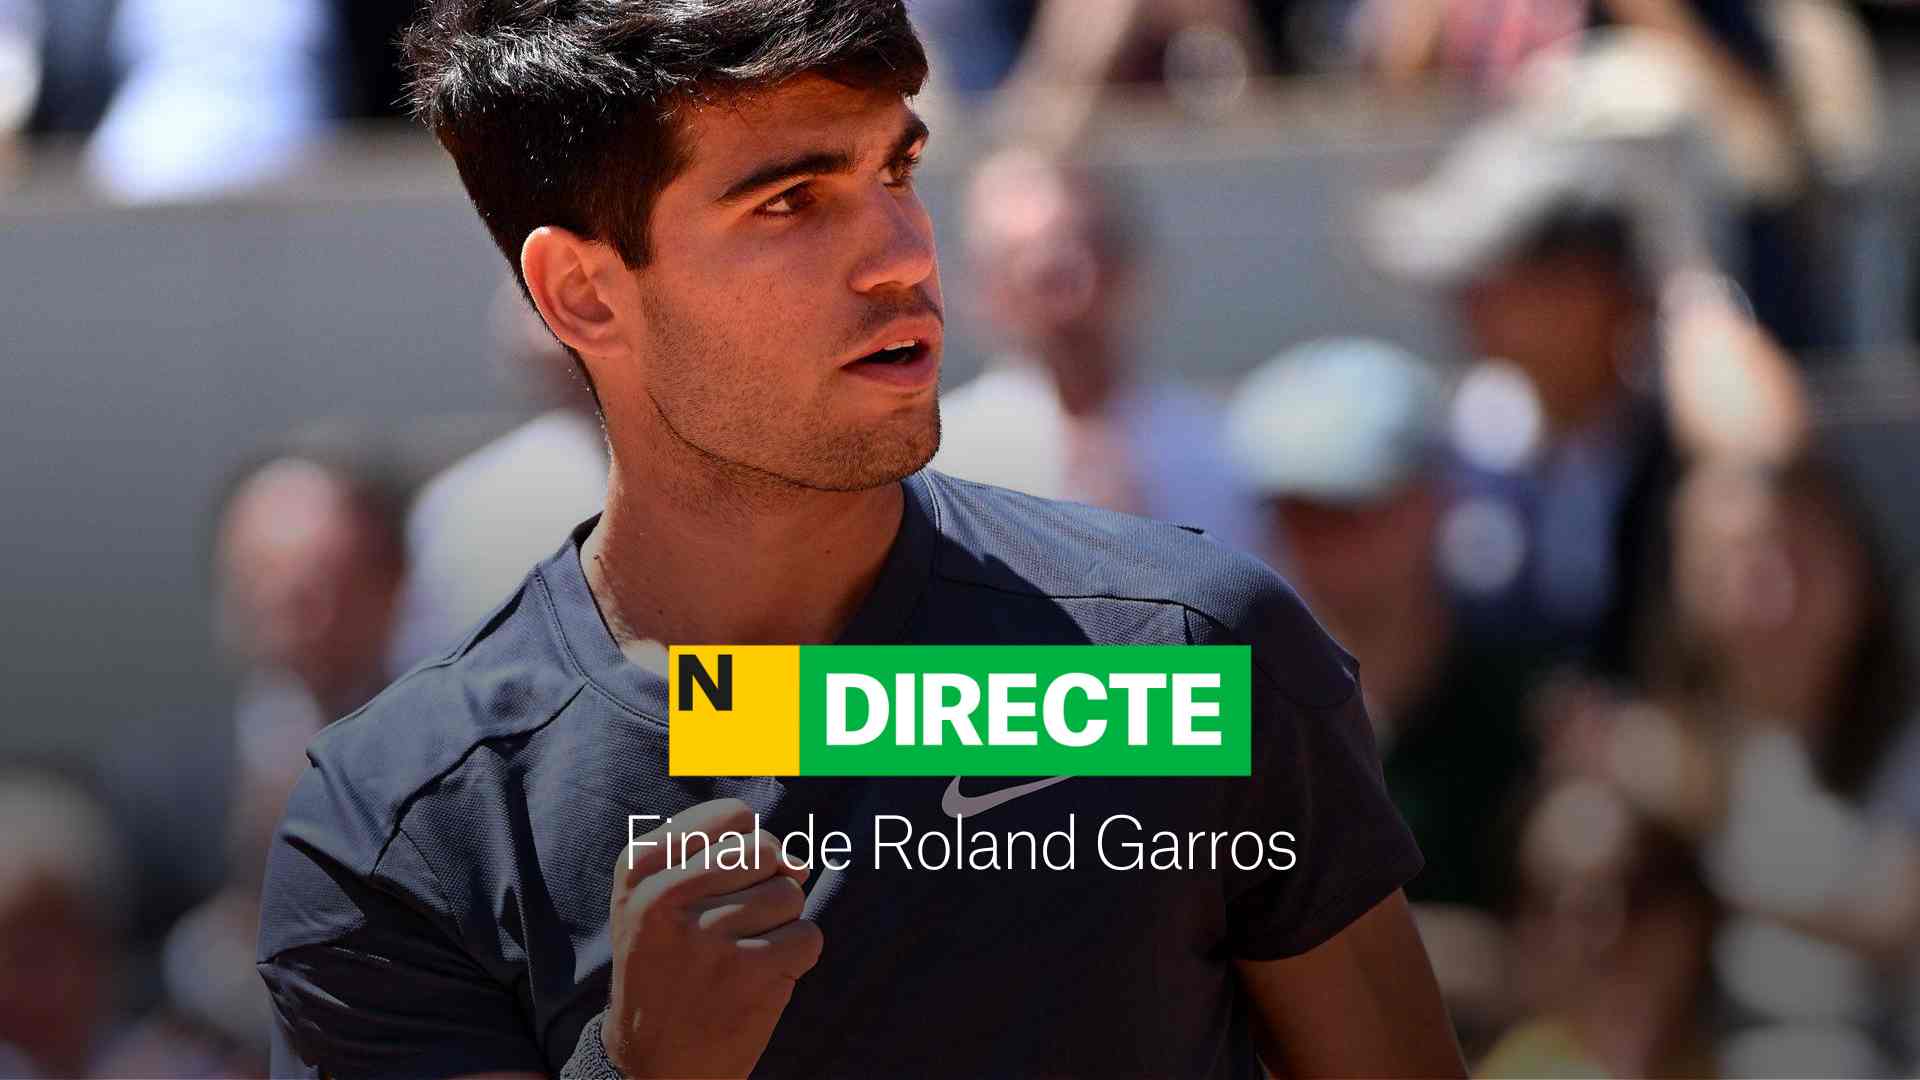 Alcaraz - Zverev final de Roland Garros, DIRECTE | Carlos Alcaraz, campió de Roland Garros